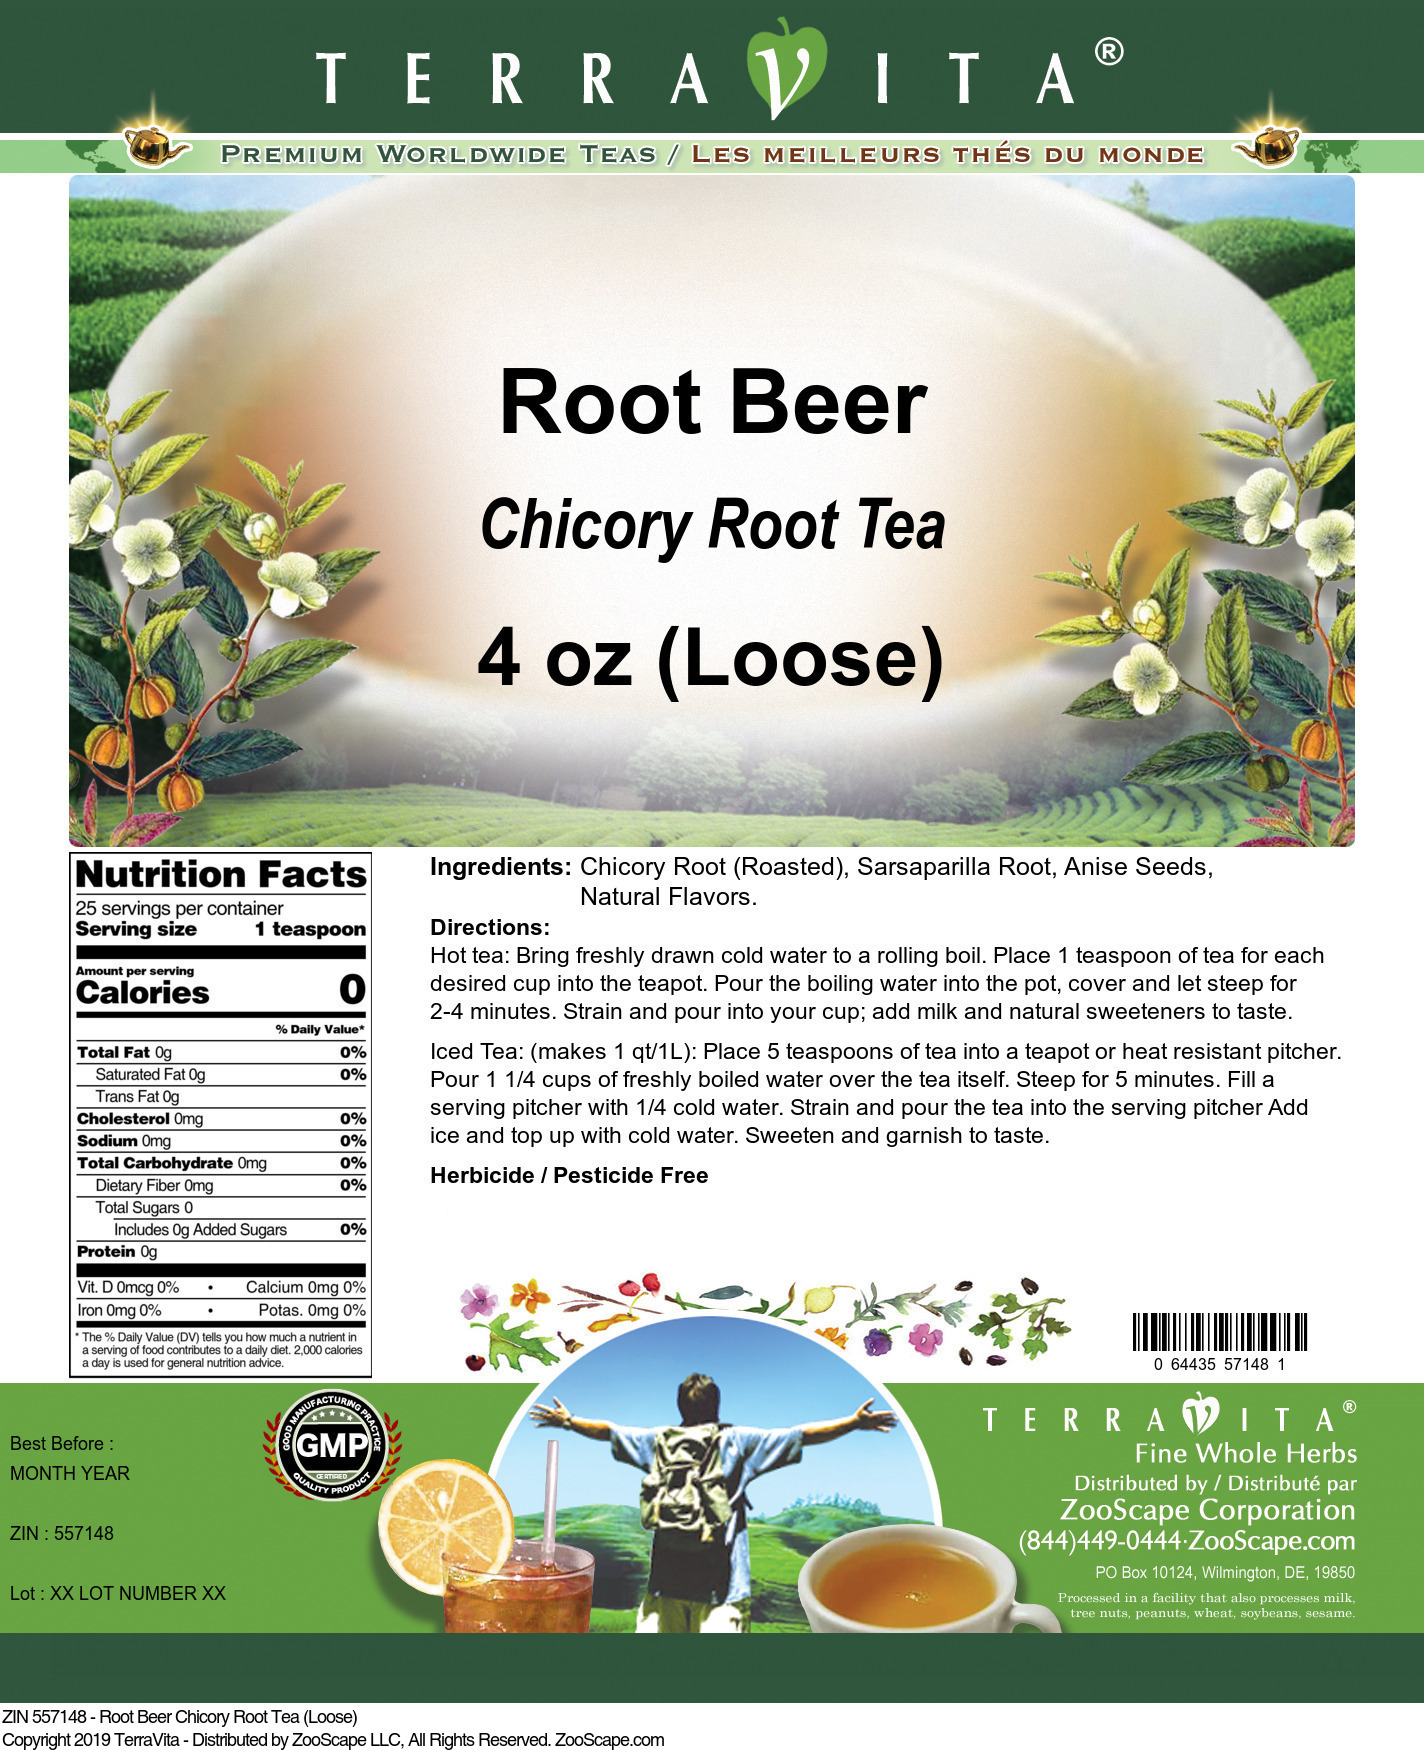 Root Beer Chicory Root Tea (Loose) - Label